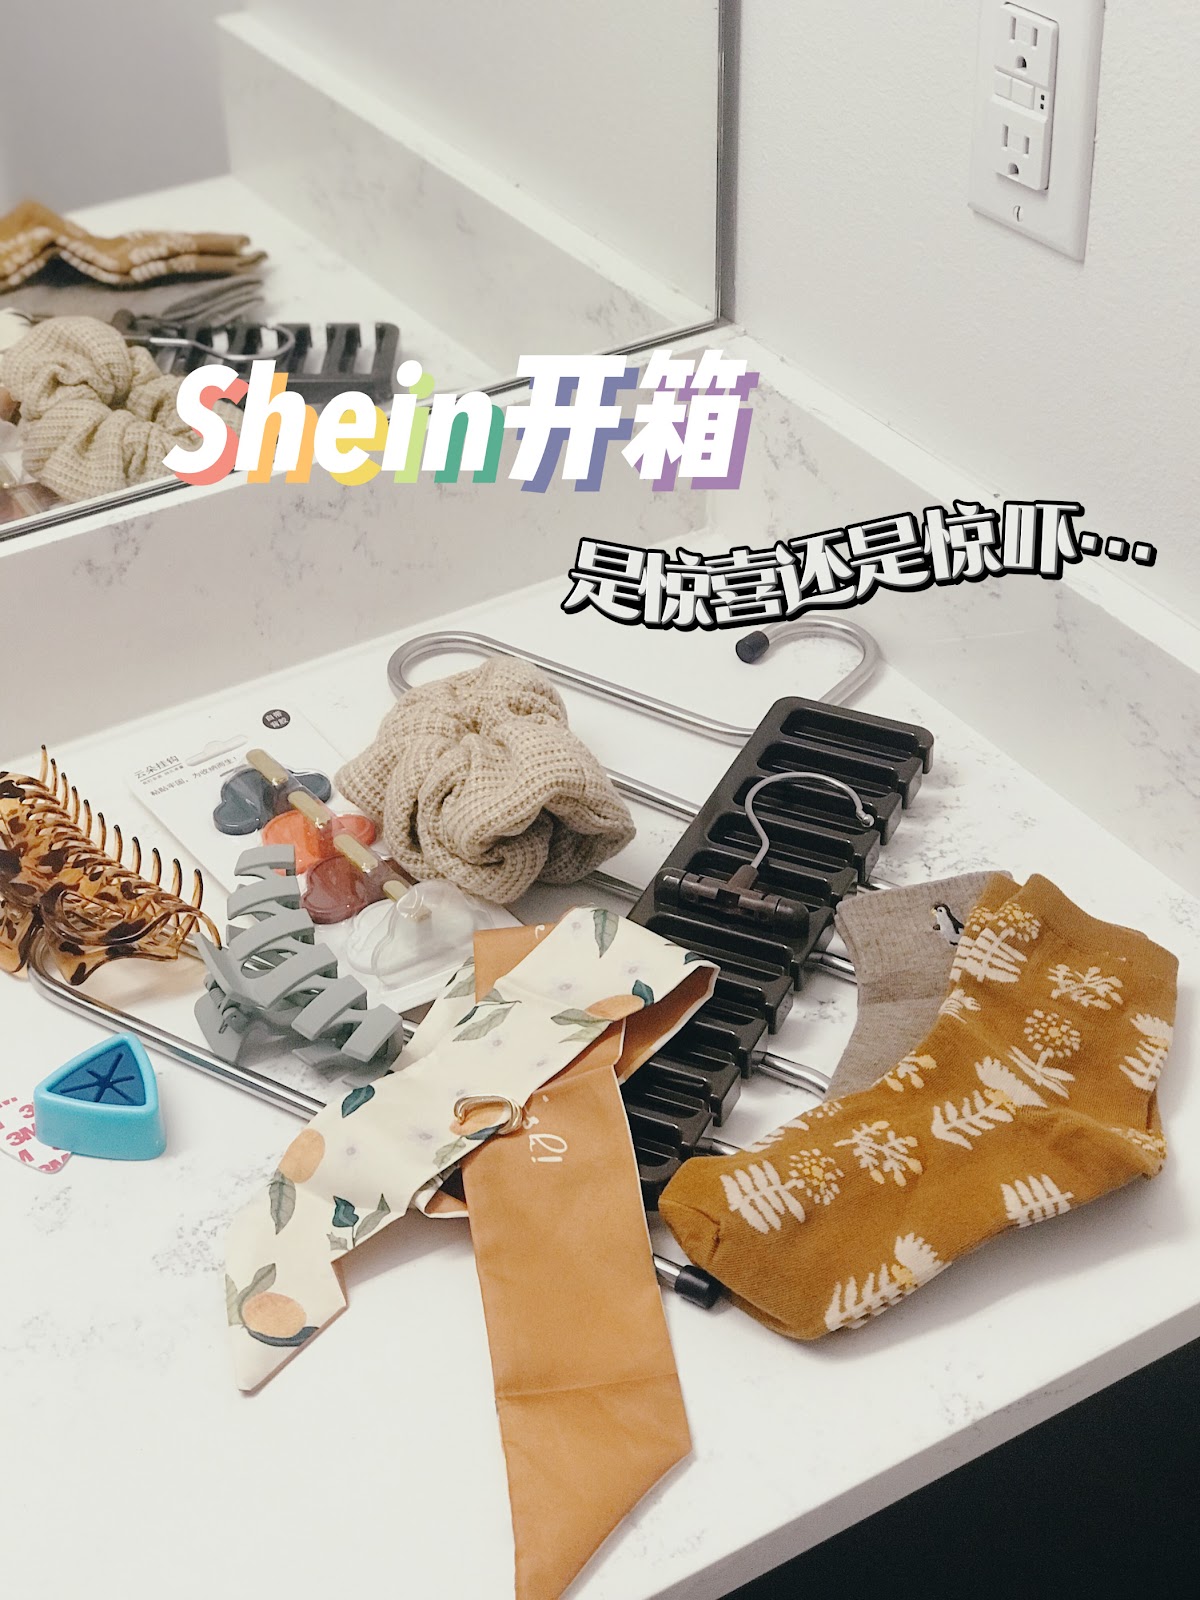 Shein-shopping-experience-居家好物-饰品配件